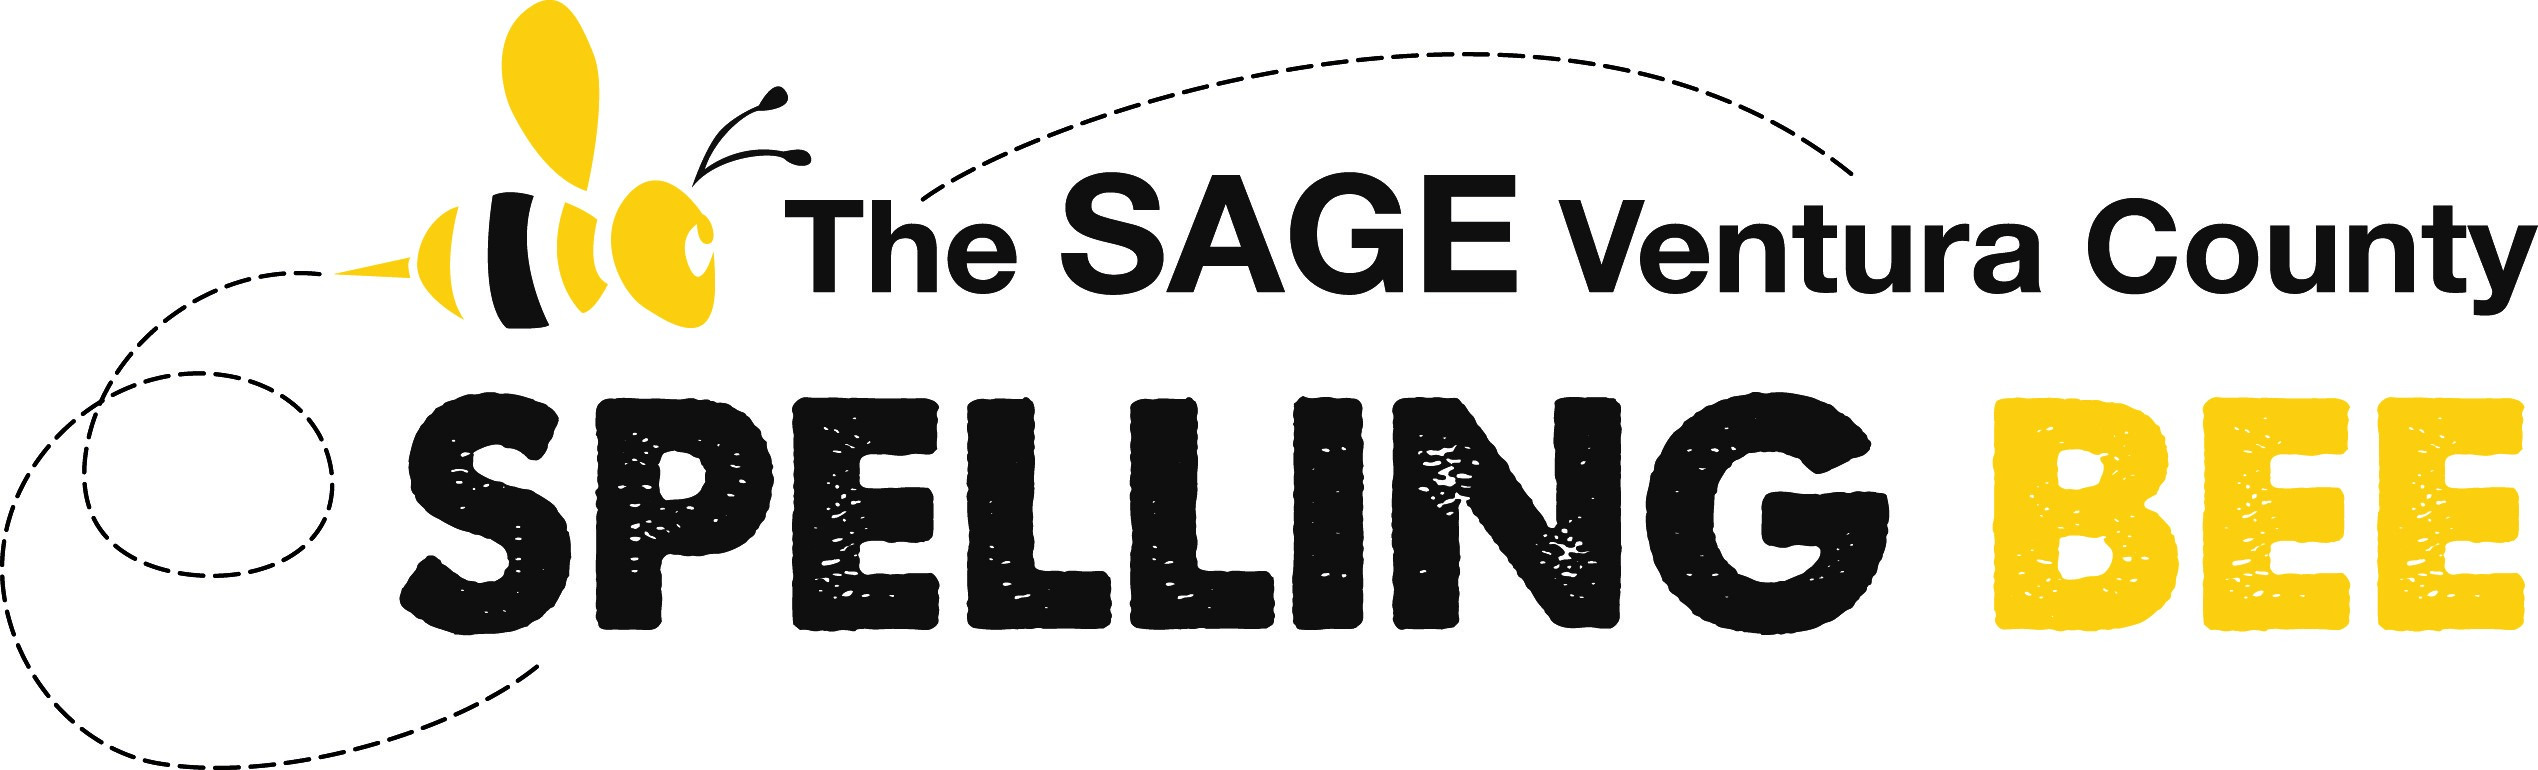 The SAGE Ventura County Spelling Bee logo